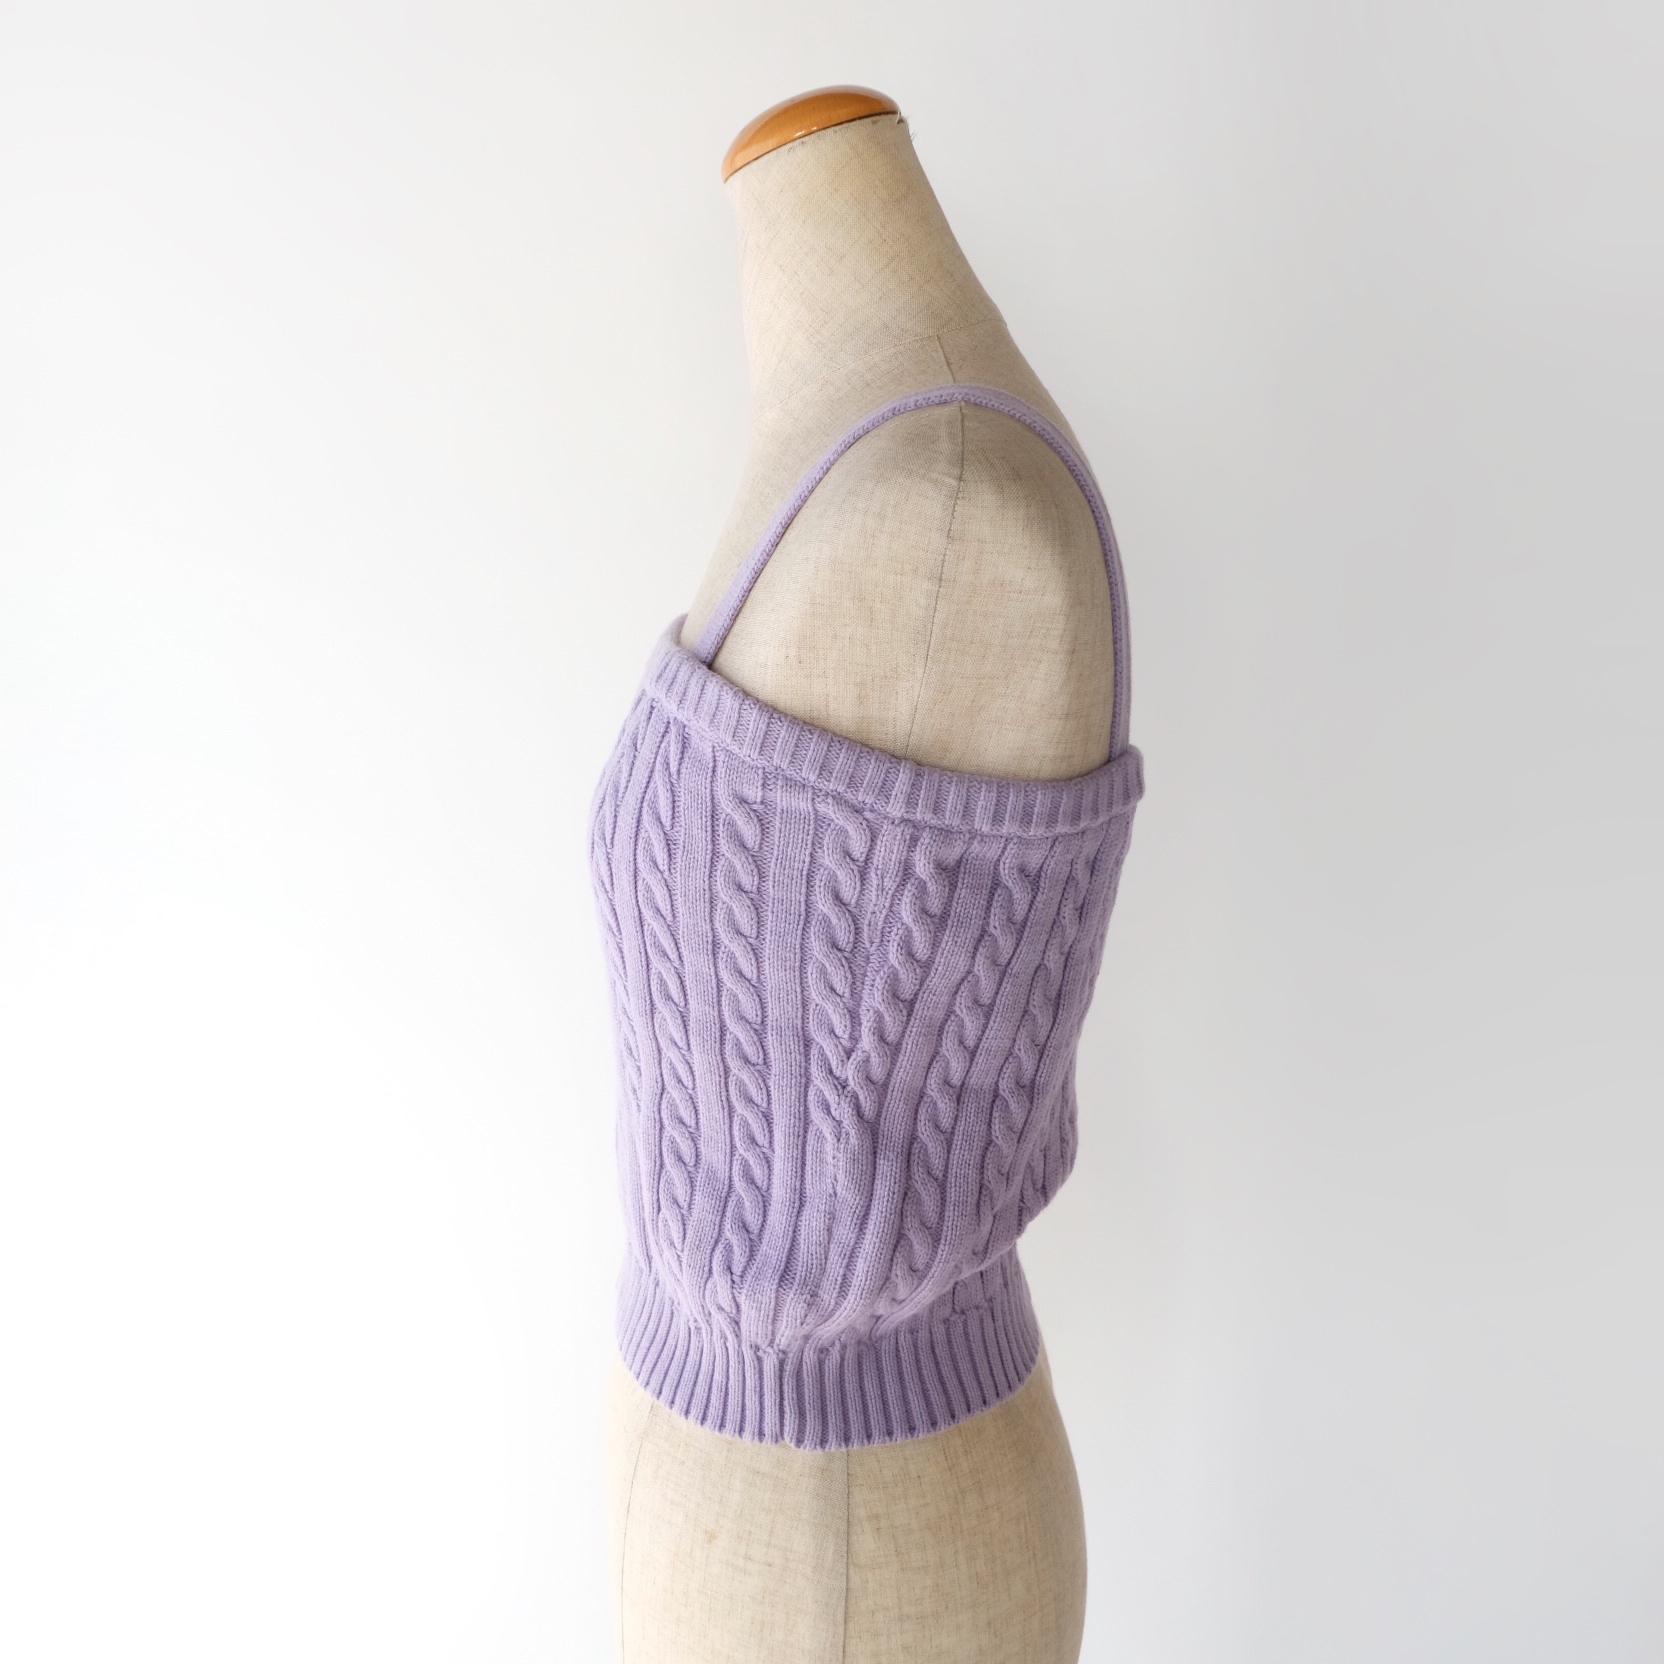 90s RALPH LAUREN cotton knit bustier